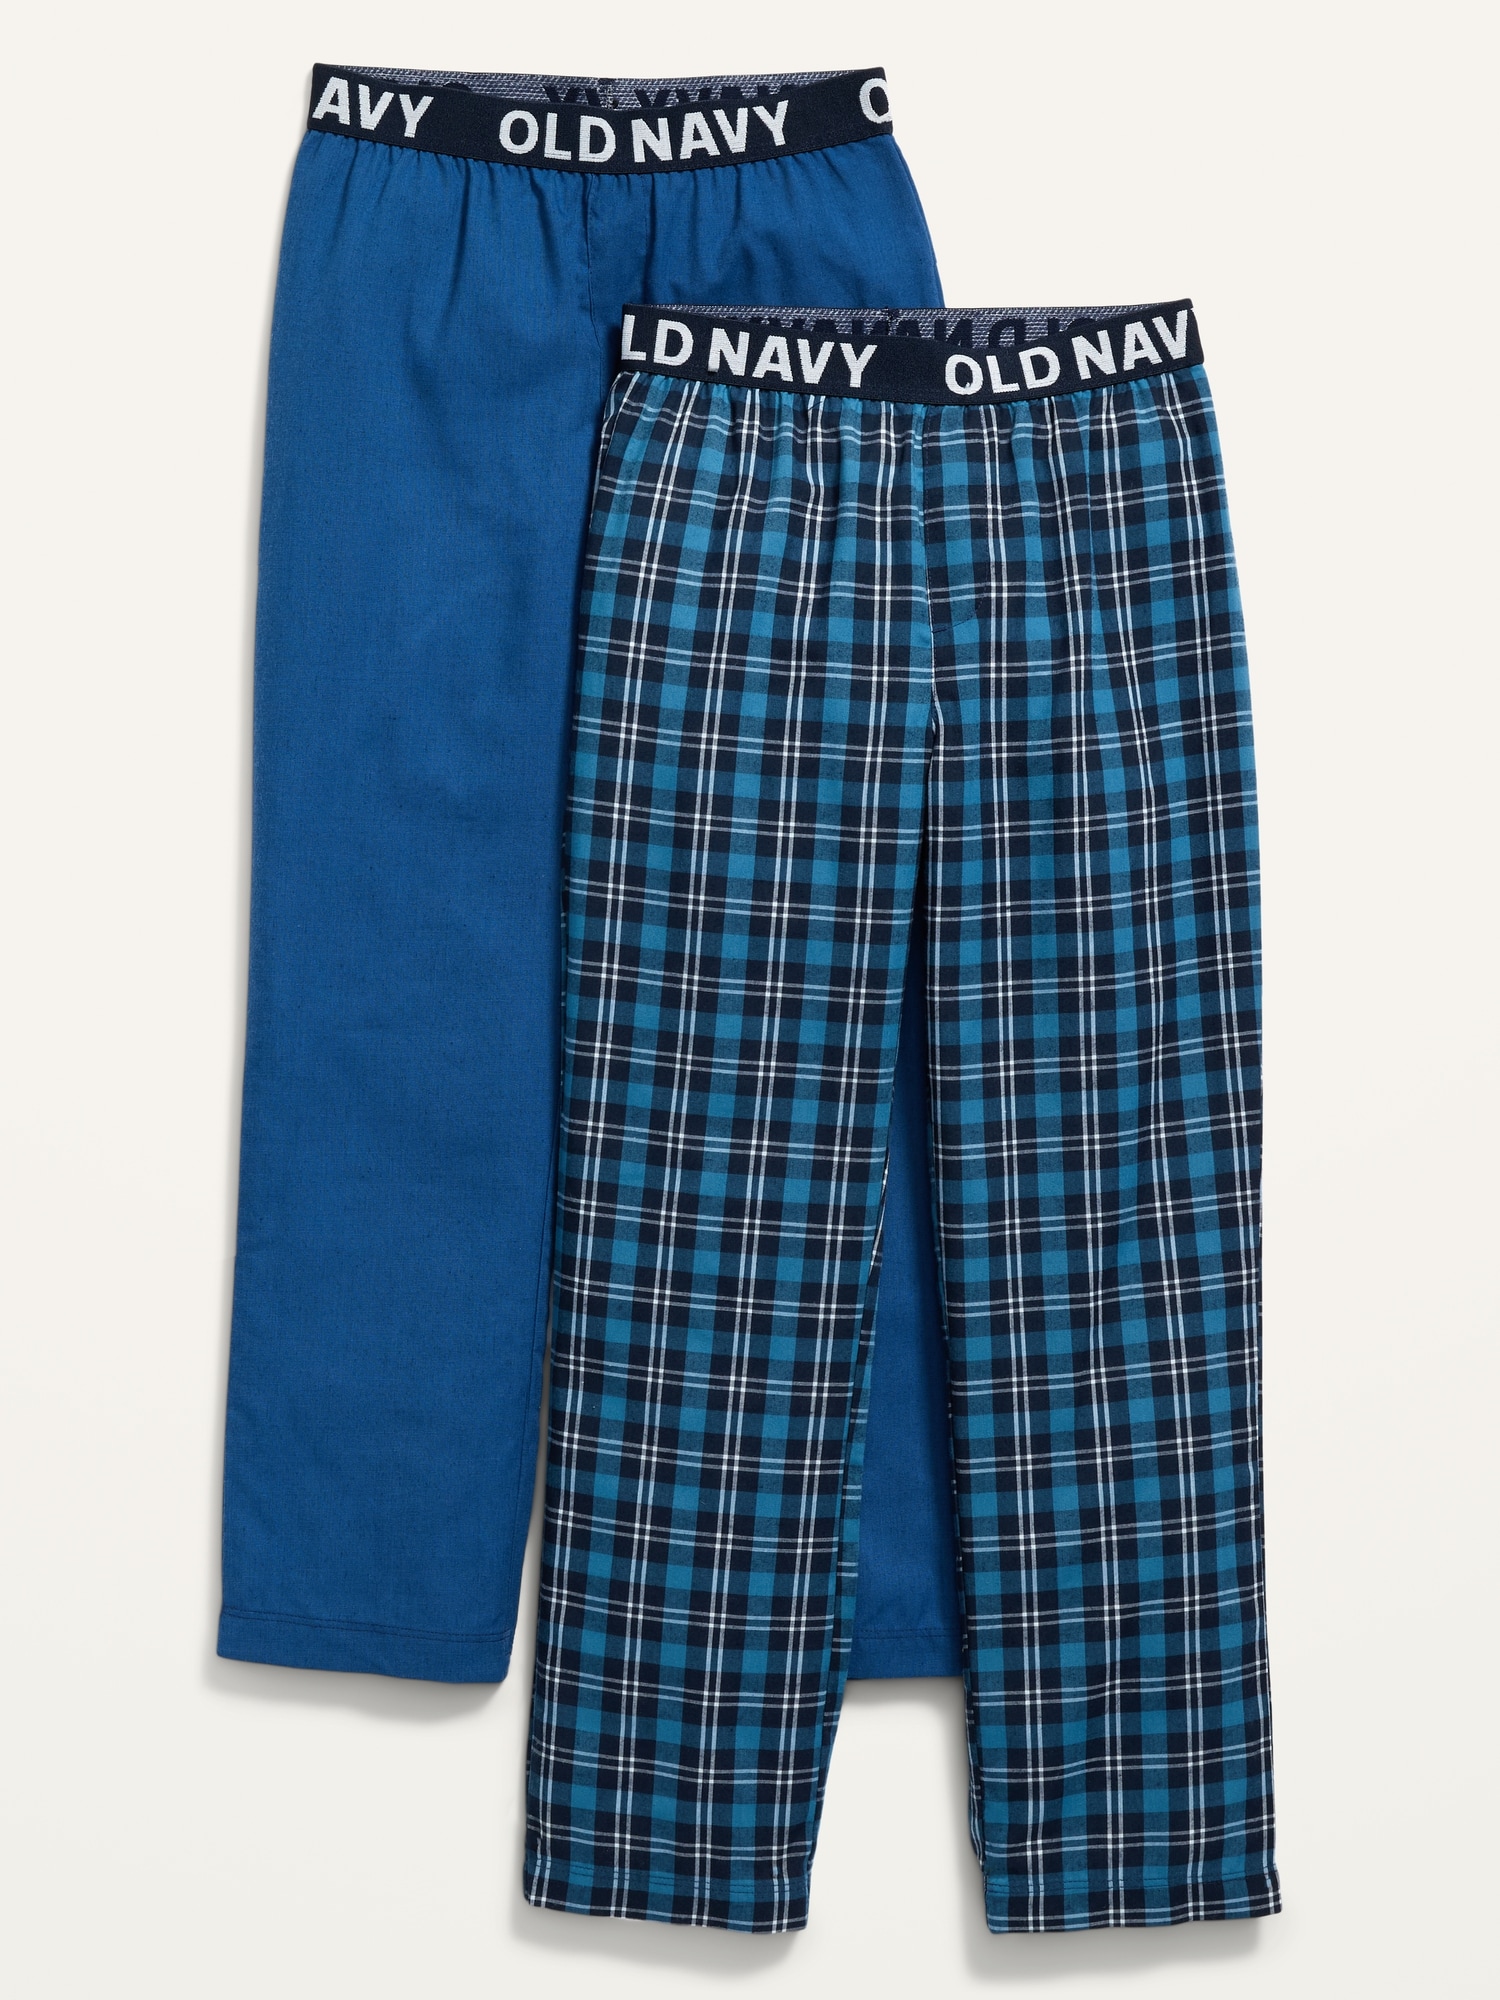 Printed Poplin Pajama Pants 2-Pack for Boys